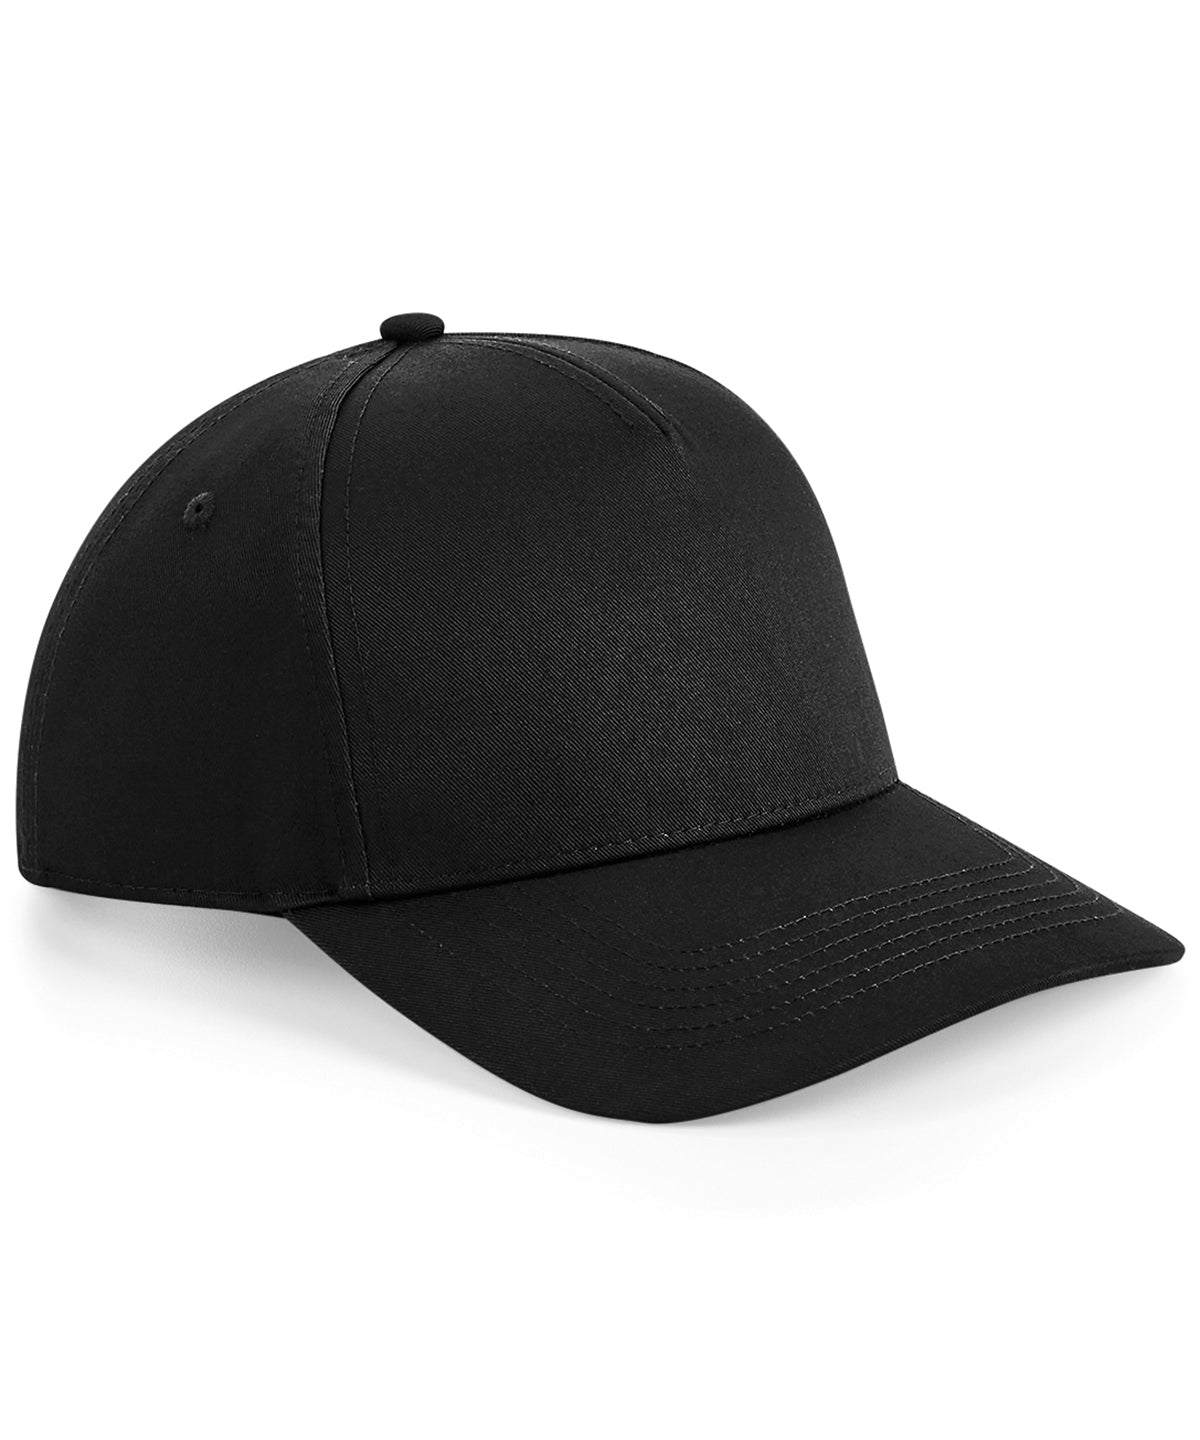 Personalised Caps - Black Beechfield Urbanwear 5-panel snapback